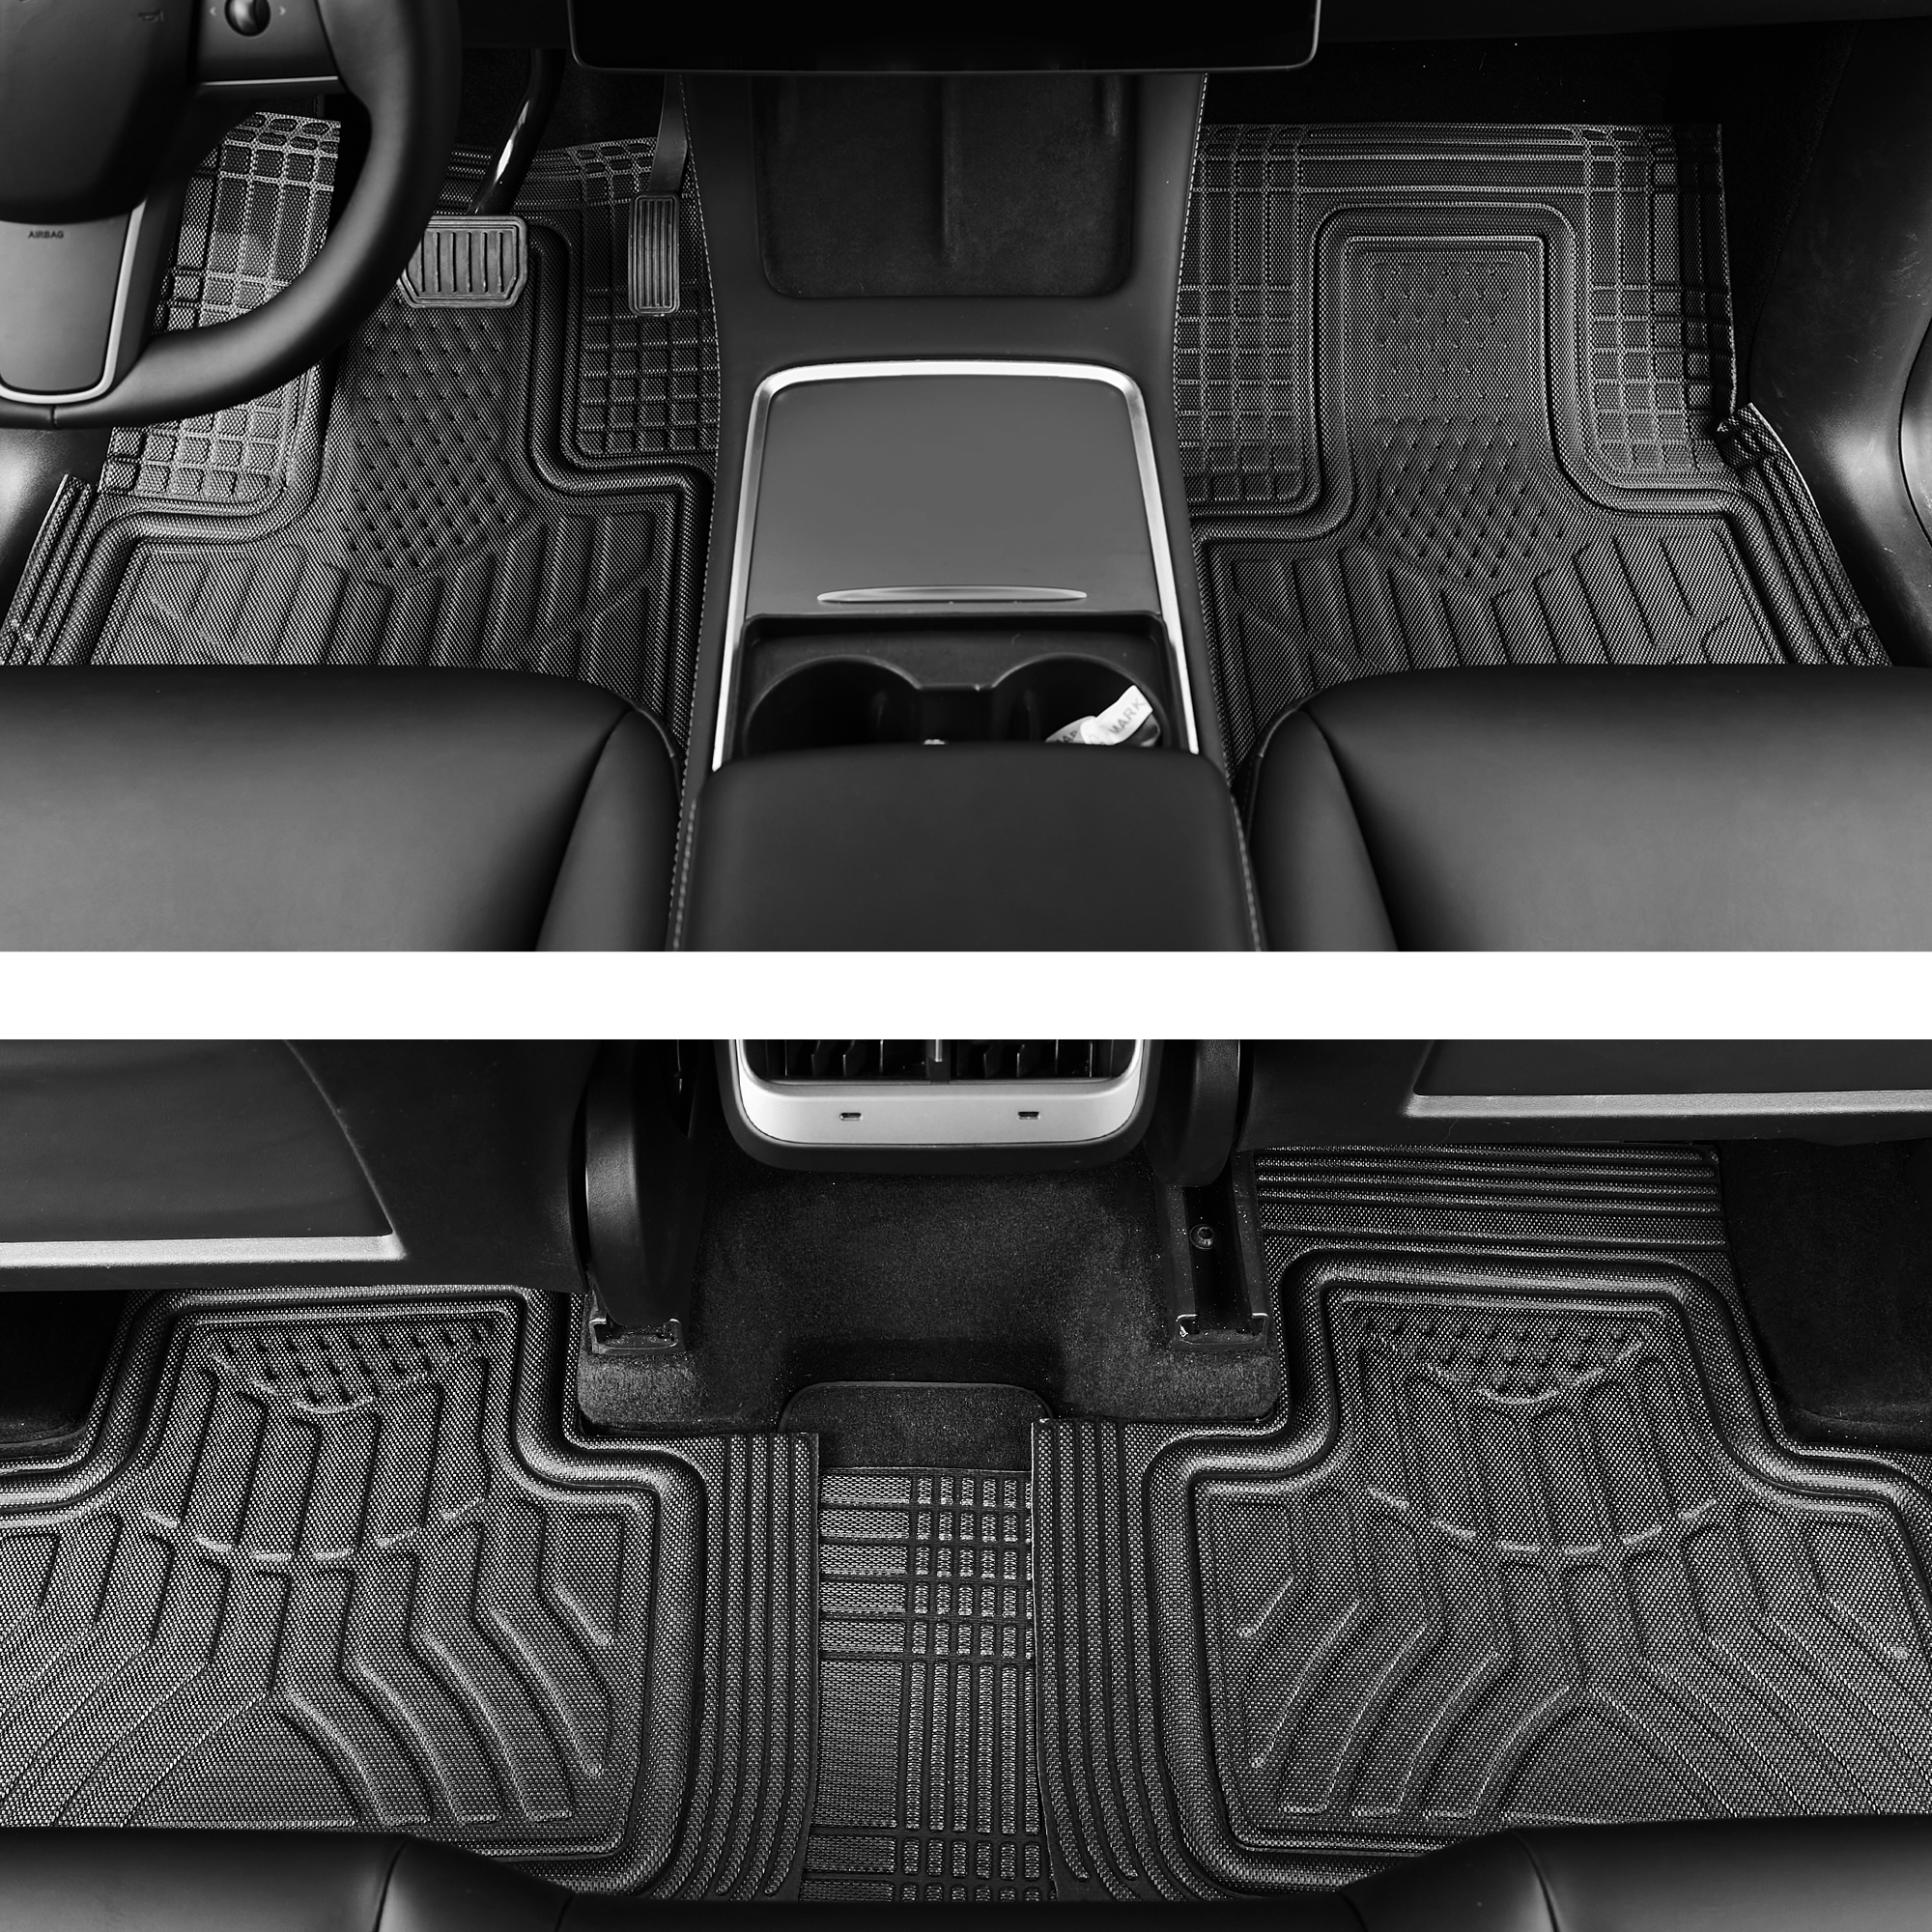 BHASD Floor Mats for Cars Trucks SUVs Universal Floor Liners（5PCS）